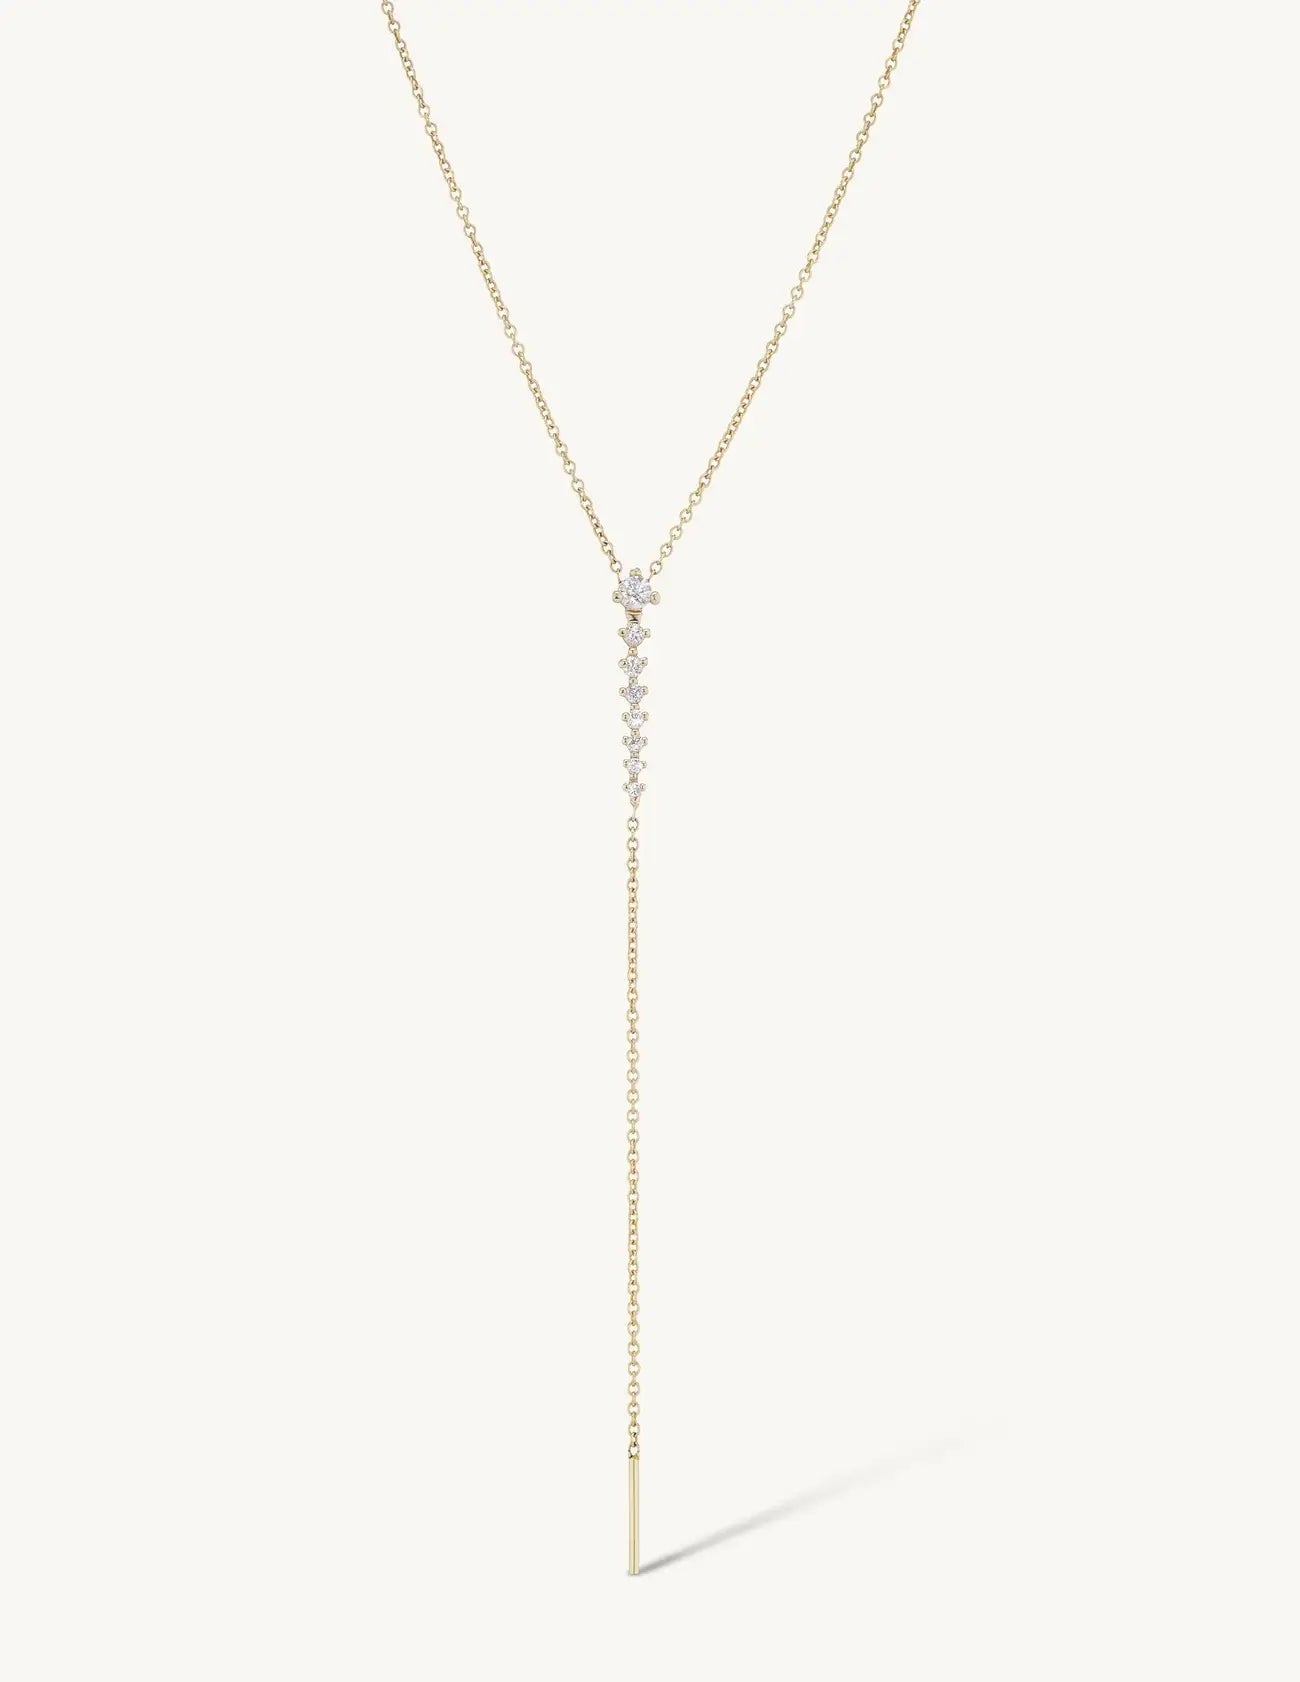 Vertebrae Drop Lariat Necklace by Sophie Ratner